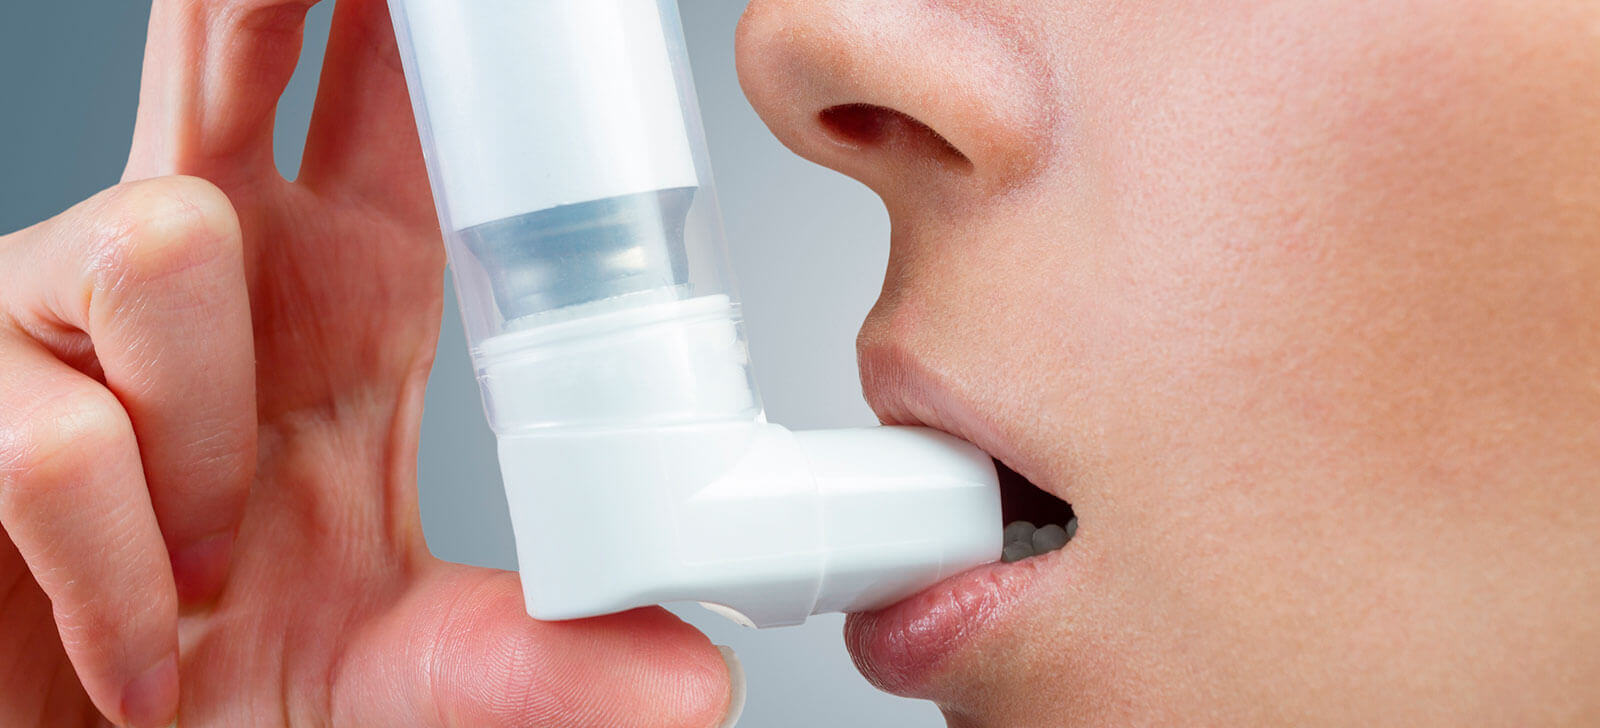 farmacia manipulacao campinas nova natural blog natureza magistral saude respiratoria medicamentos asma 